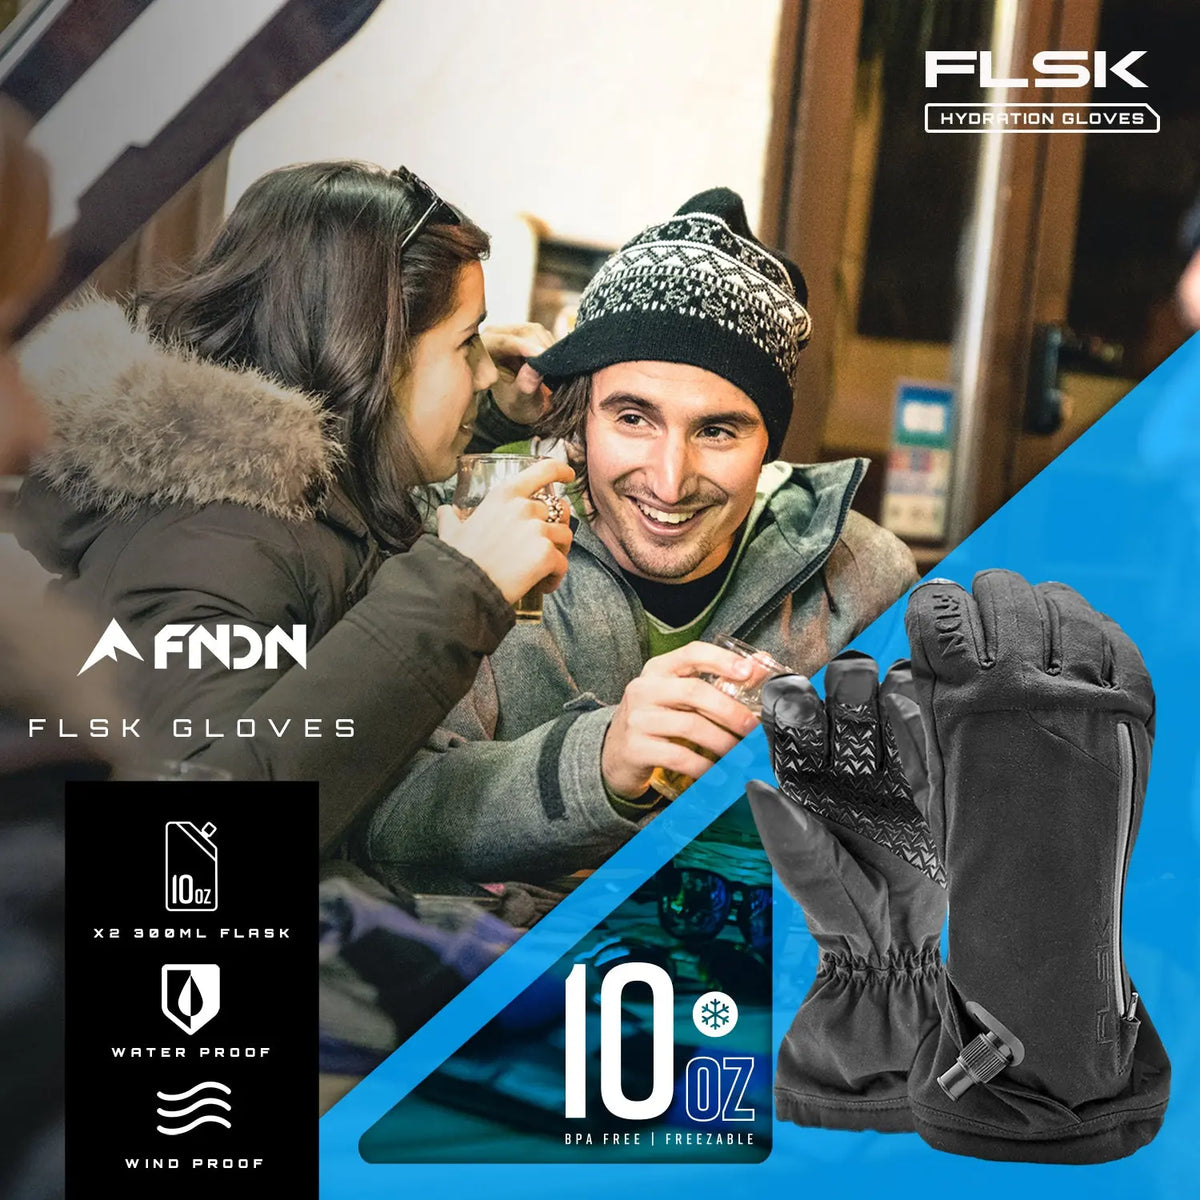 FNDN FLSK Glove - The FLASK GLOVE